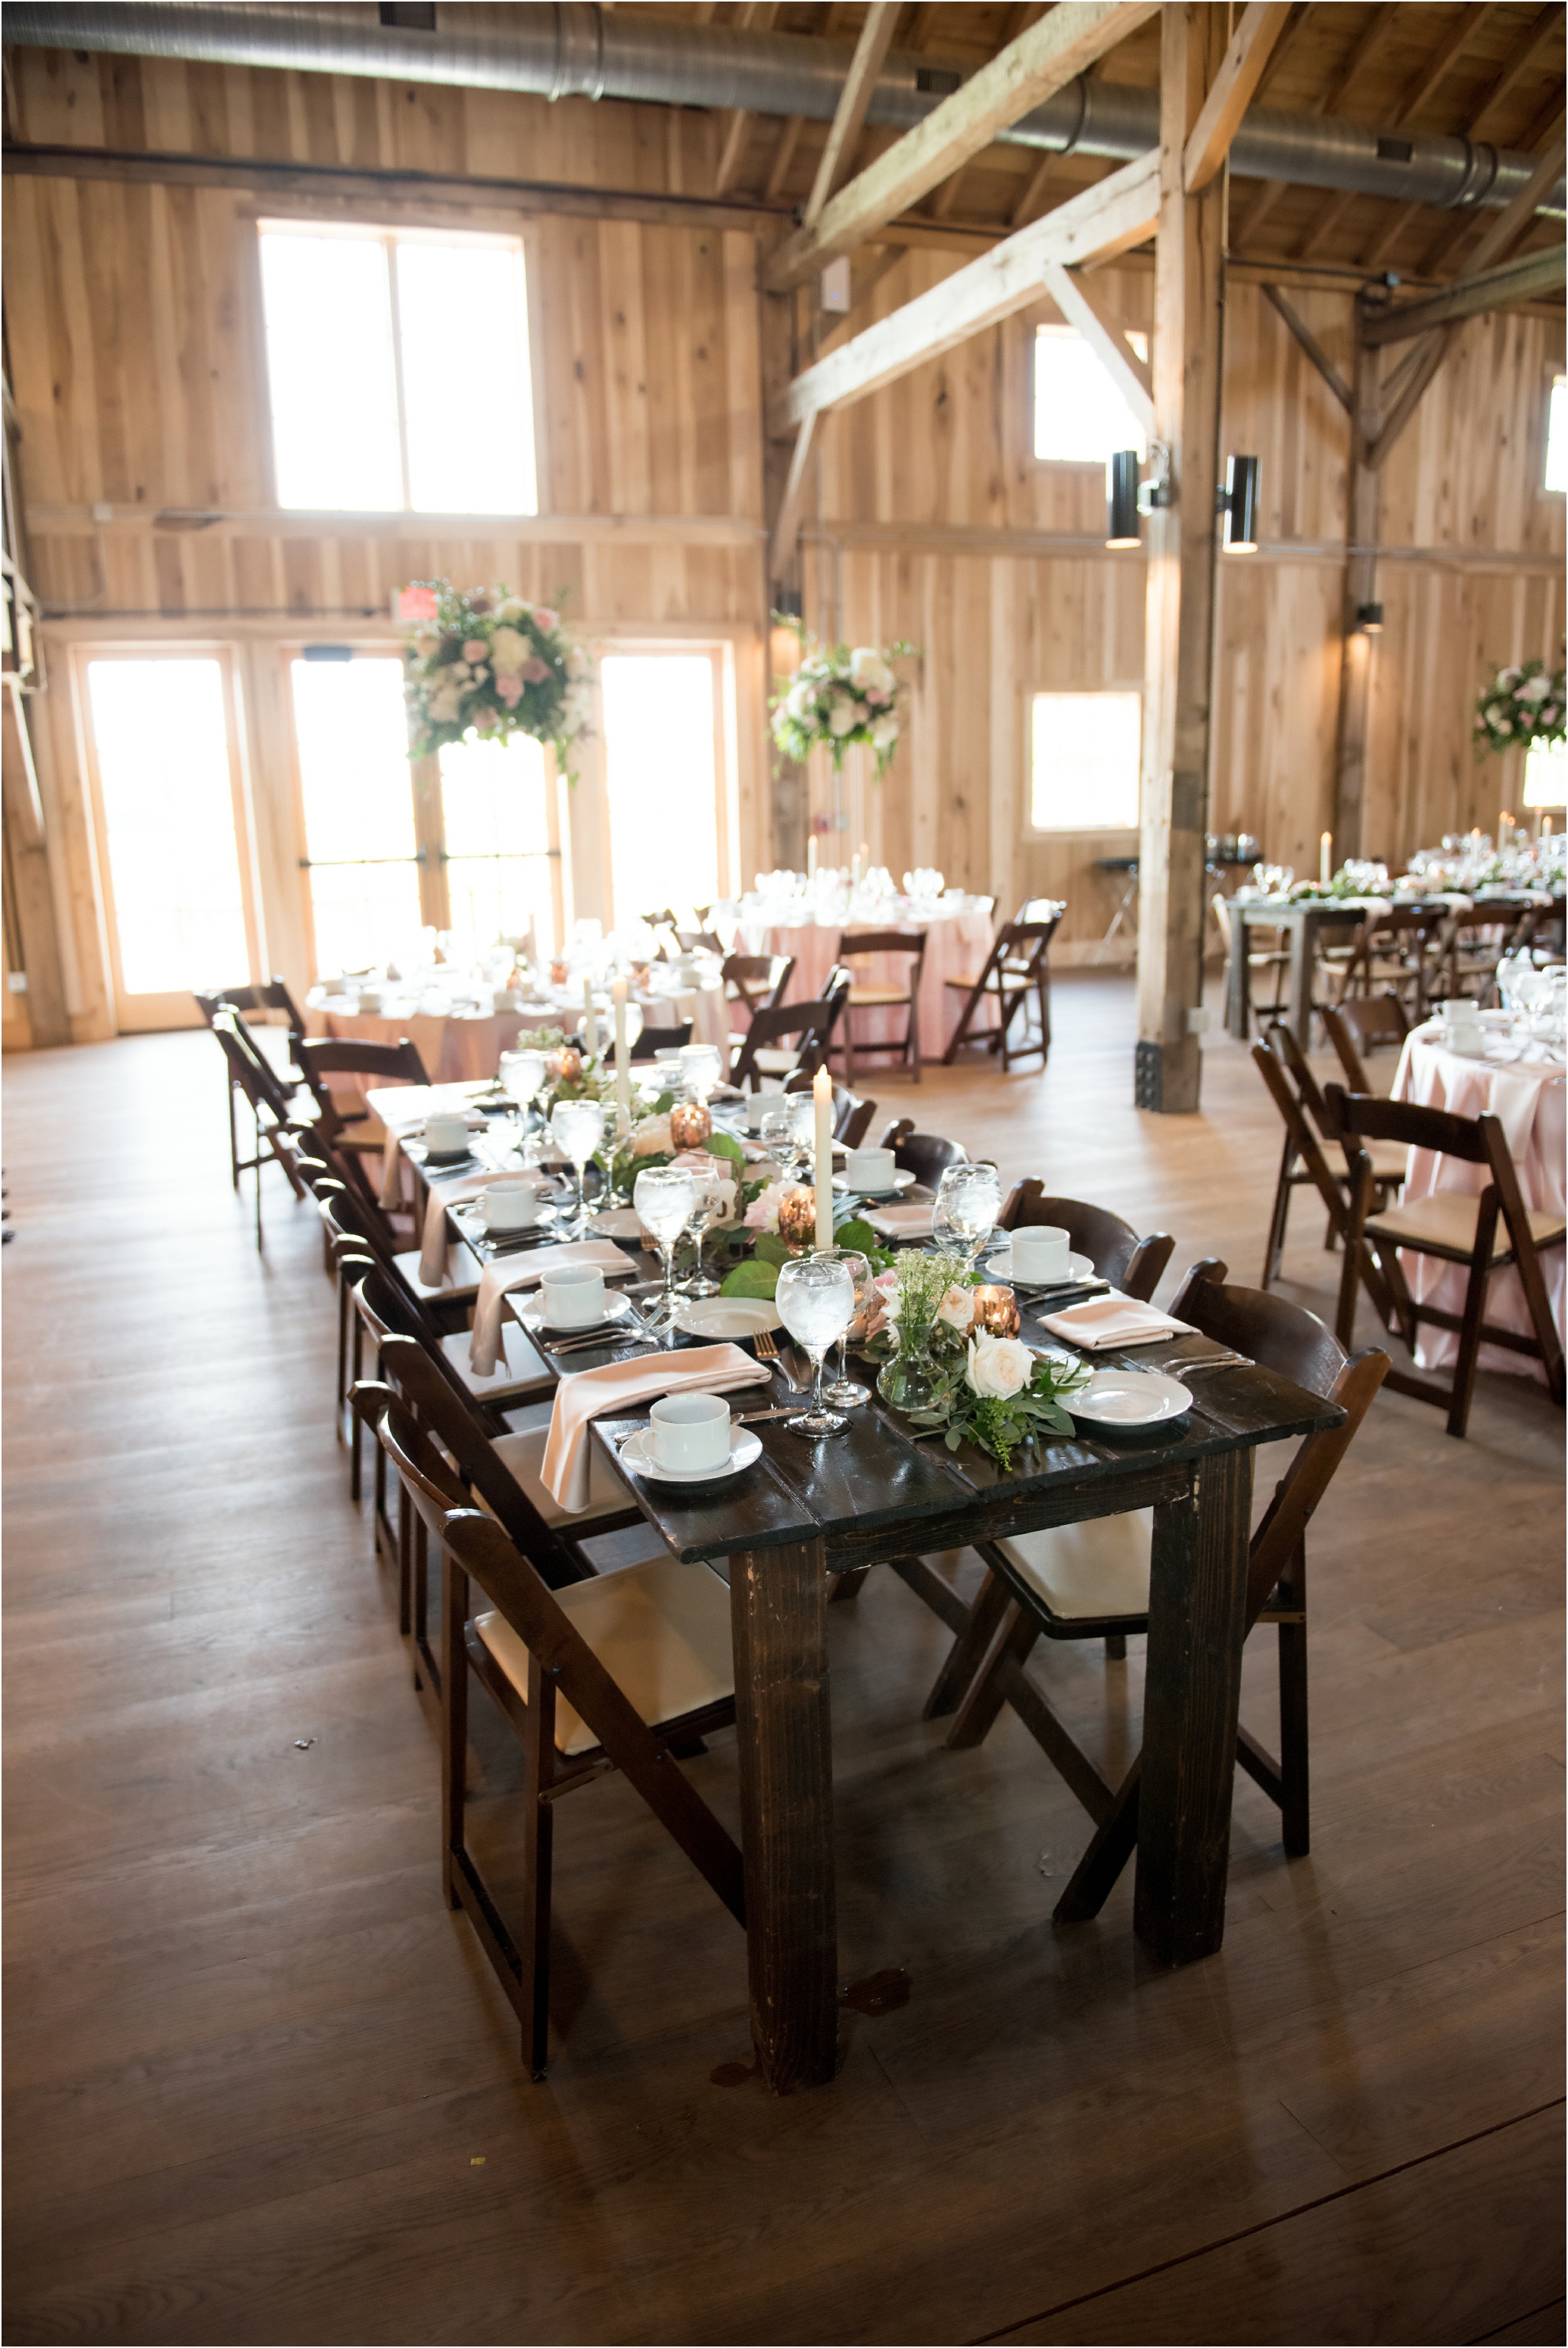 Lindley Farmstead at Chatham Hills | Sarah and Rachel Wedding Photographers | Westfield, Indiana wedding | farmhouse tables elsies flower shoppe